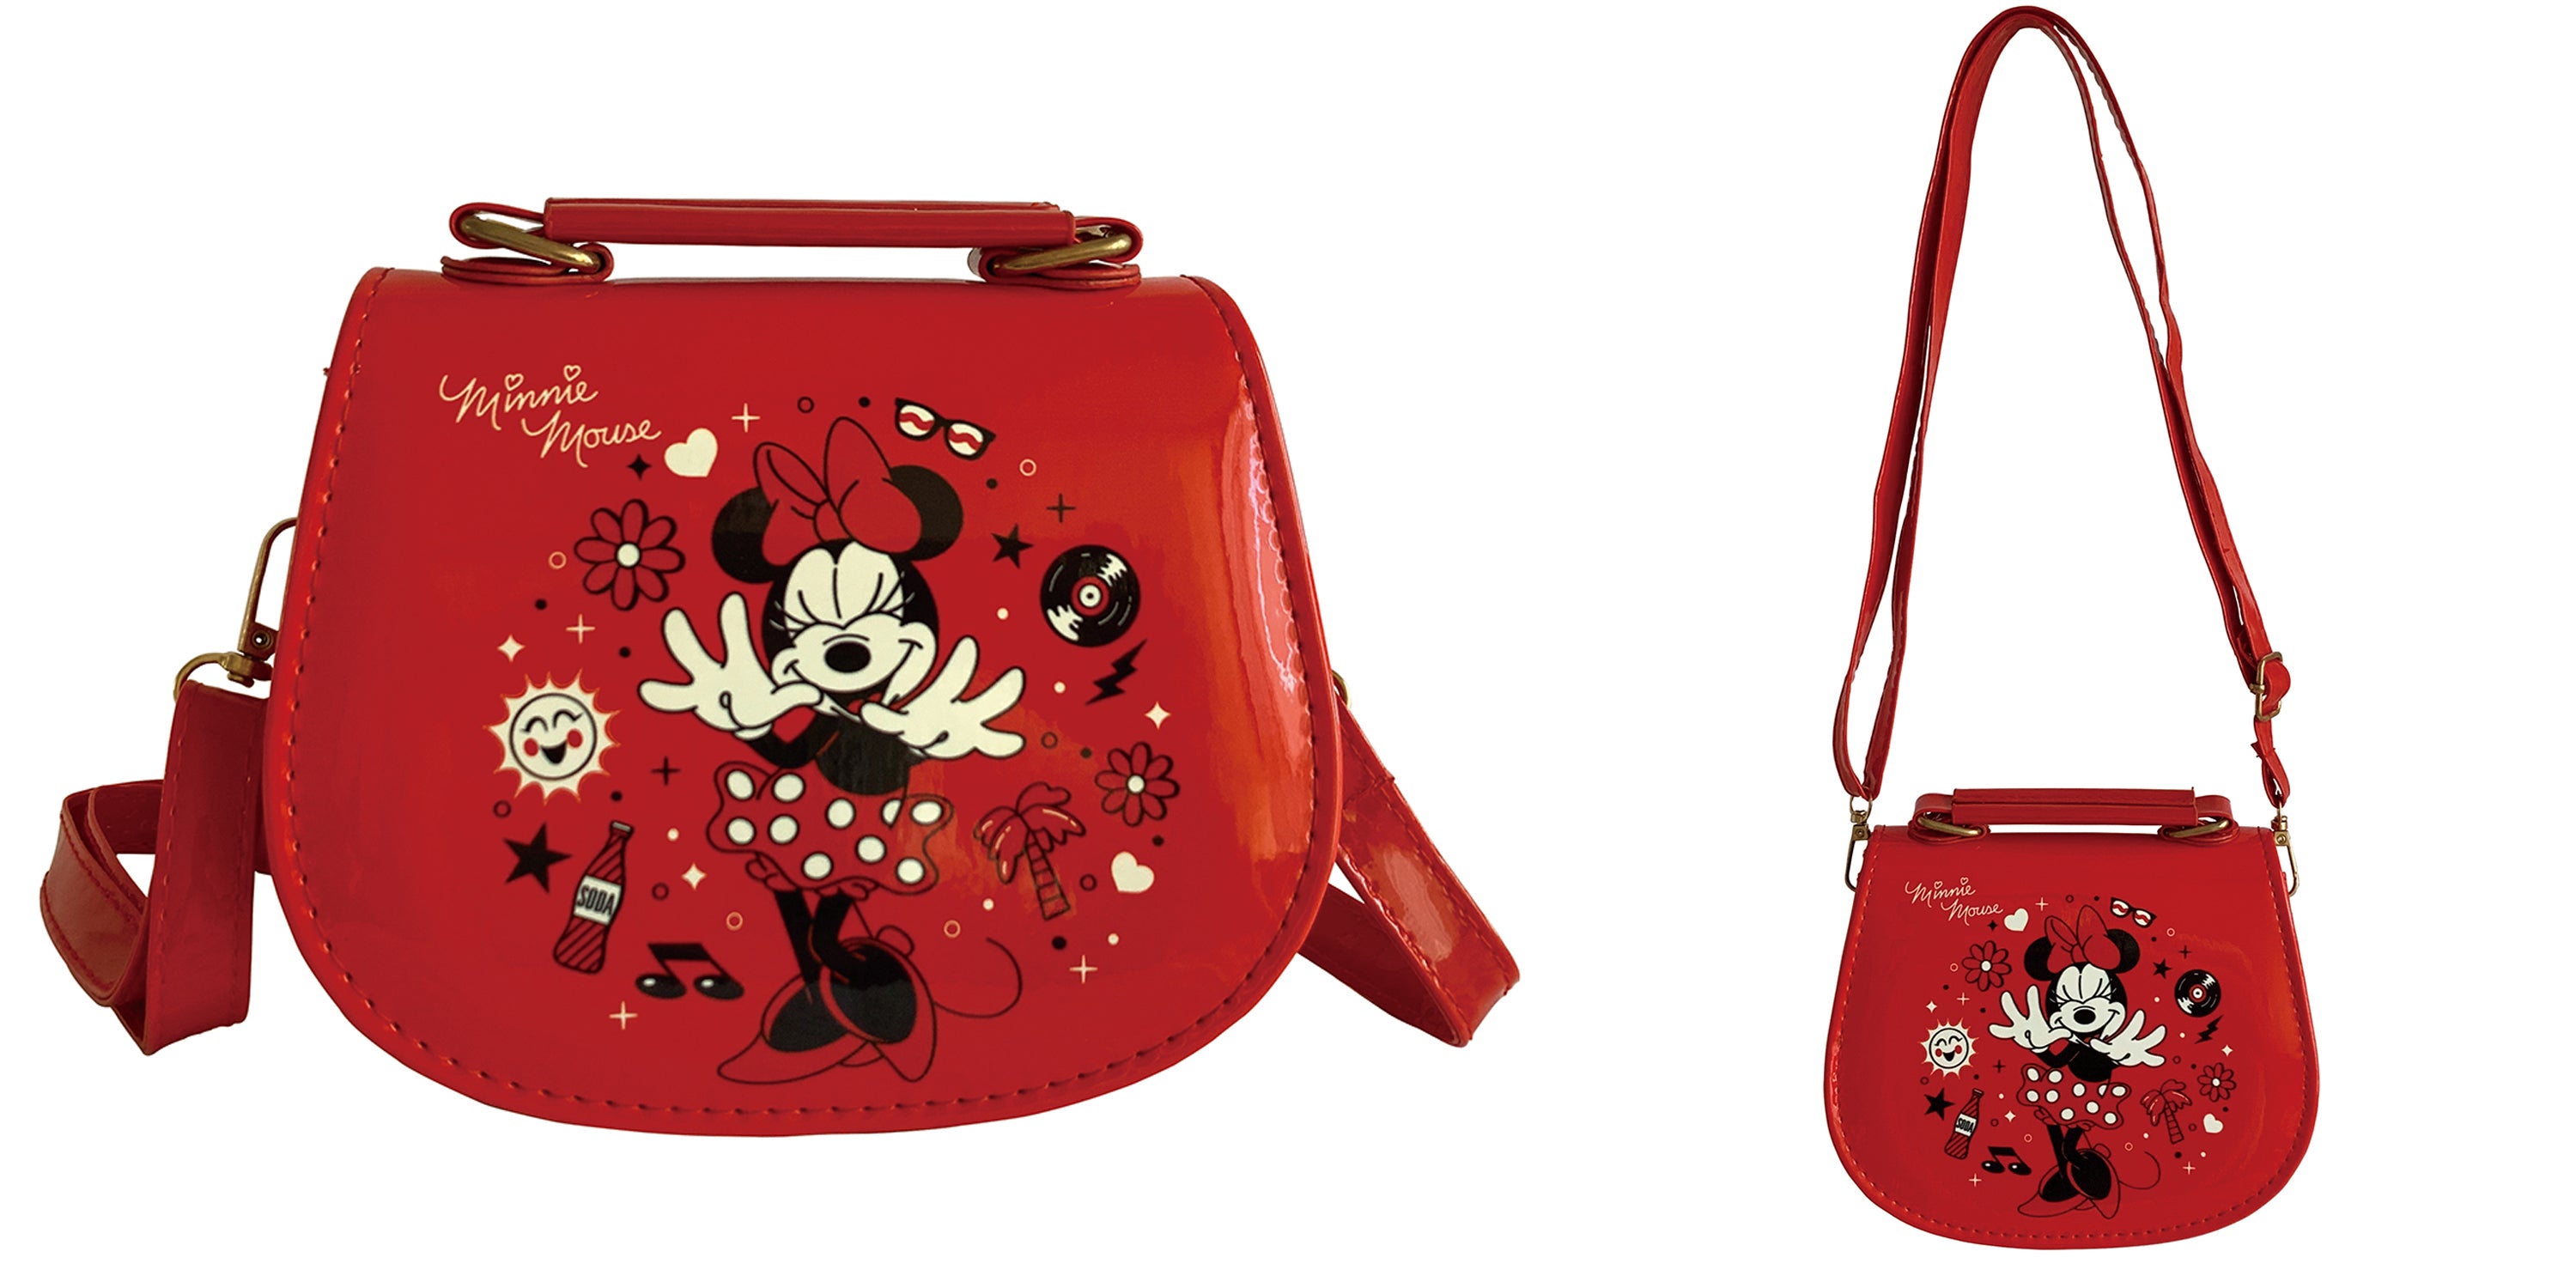 Minnie Mouse - Kids handbag DIS209 - Red-1